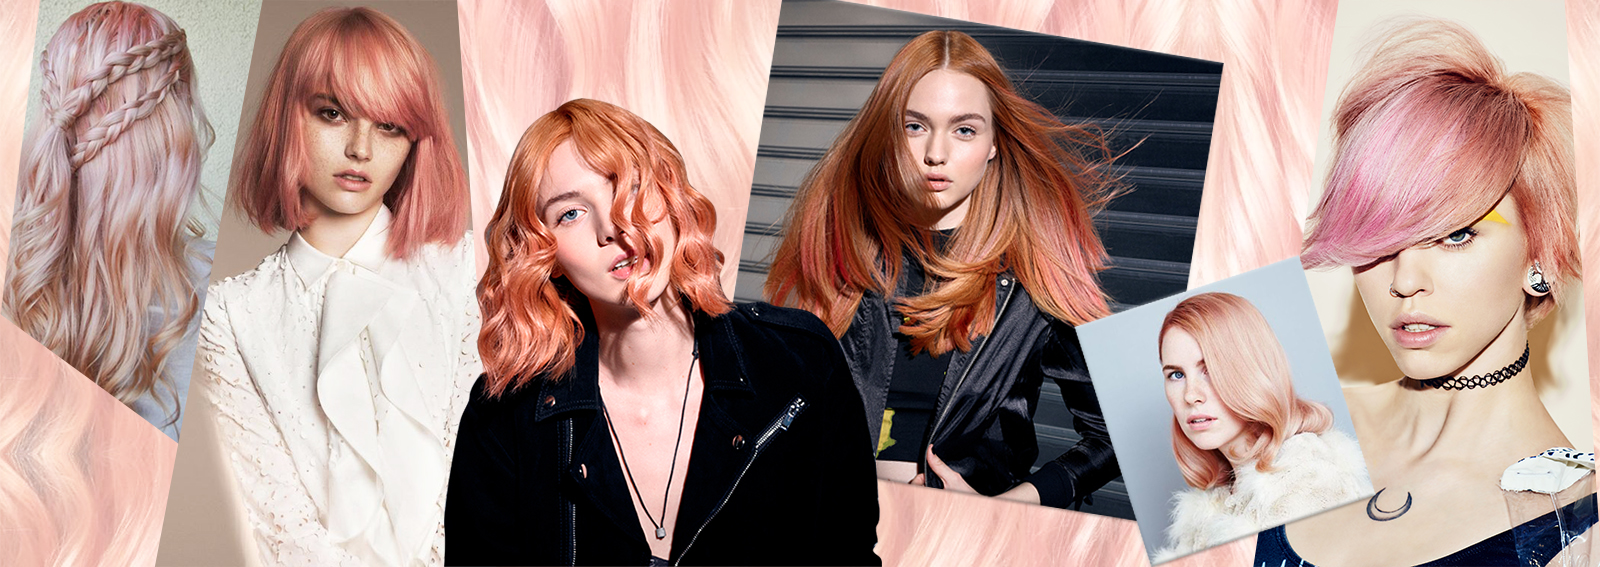 capelli peach blonde collage_desktop